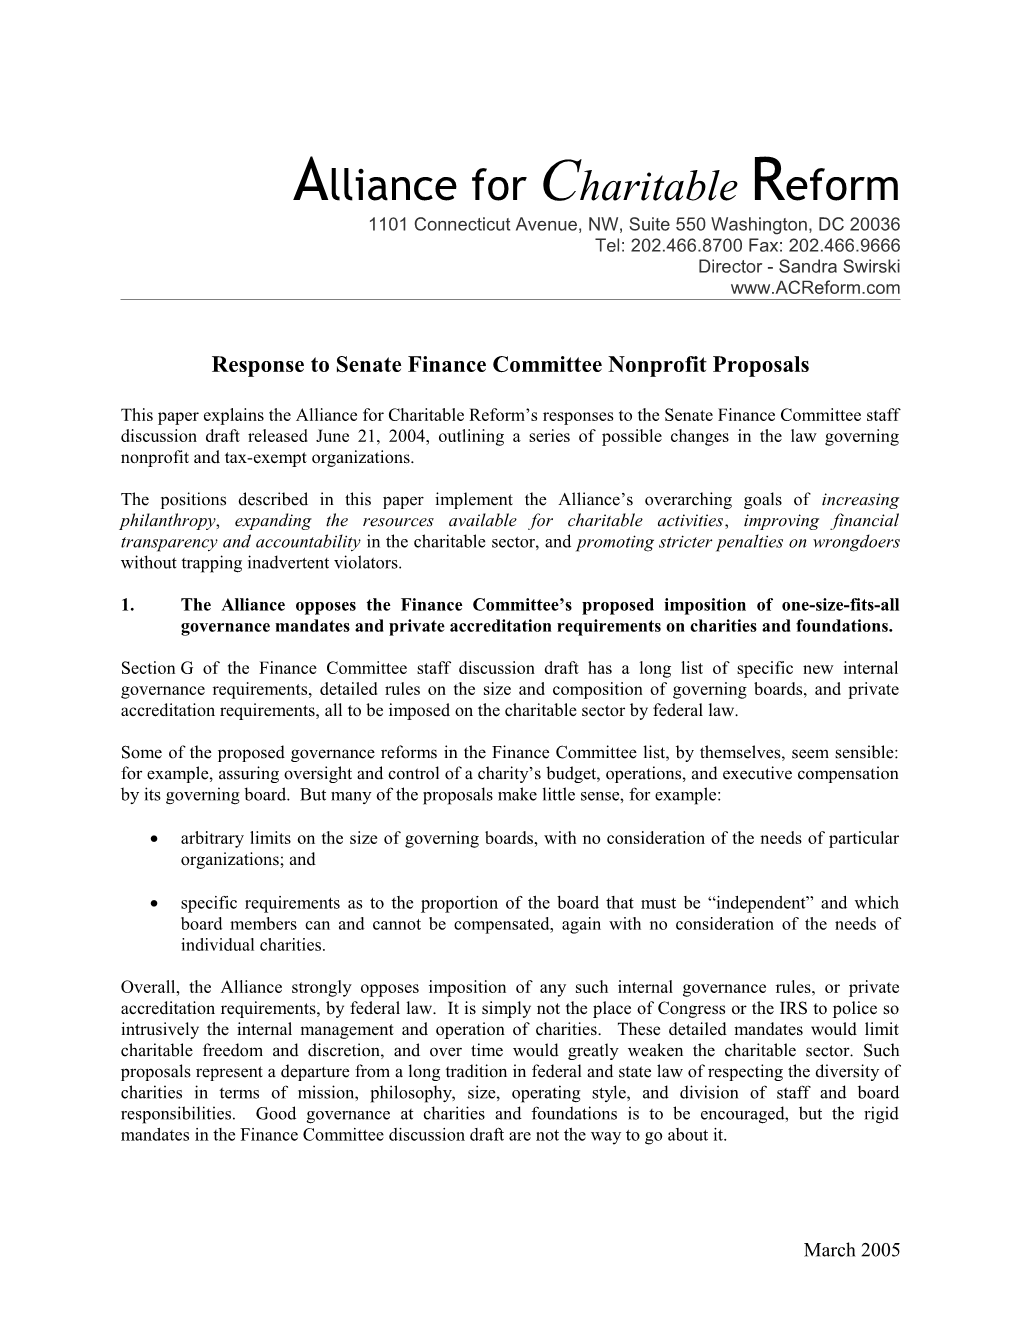 Response to Senate Finance Committee Nonprofit Proposals